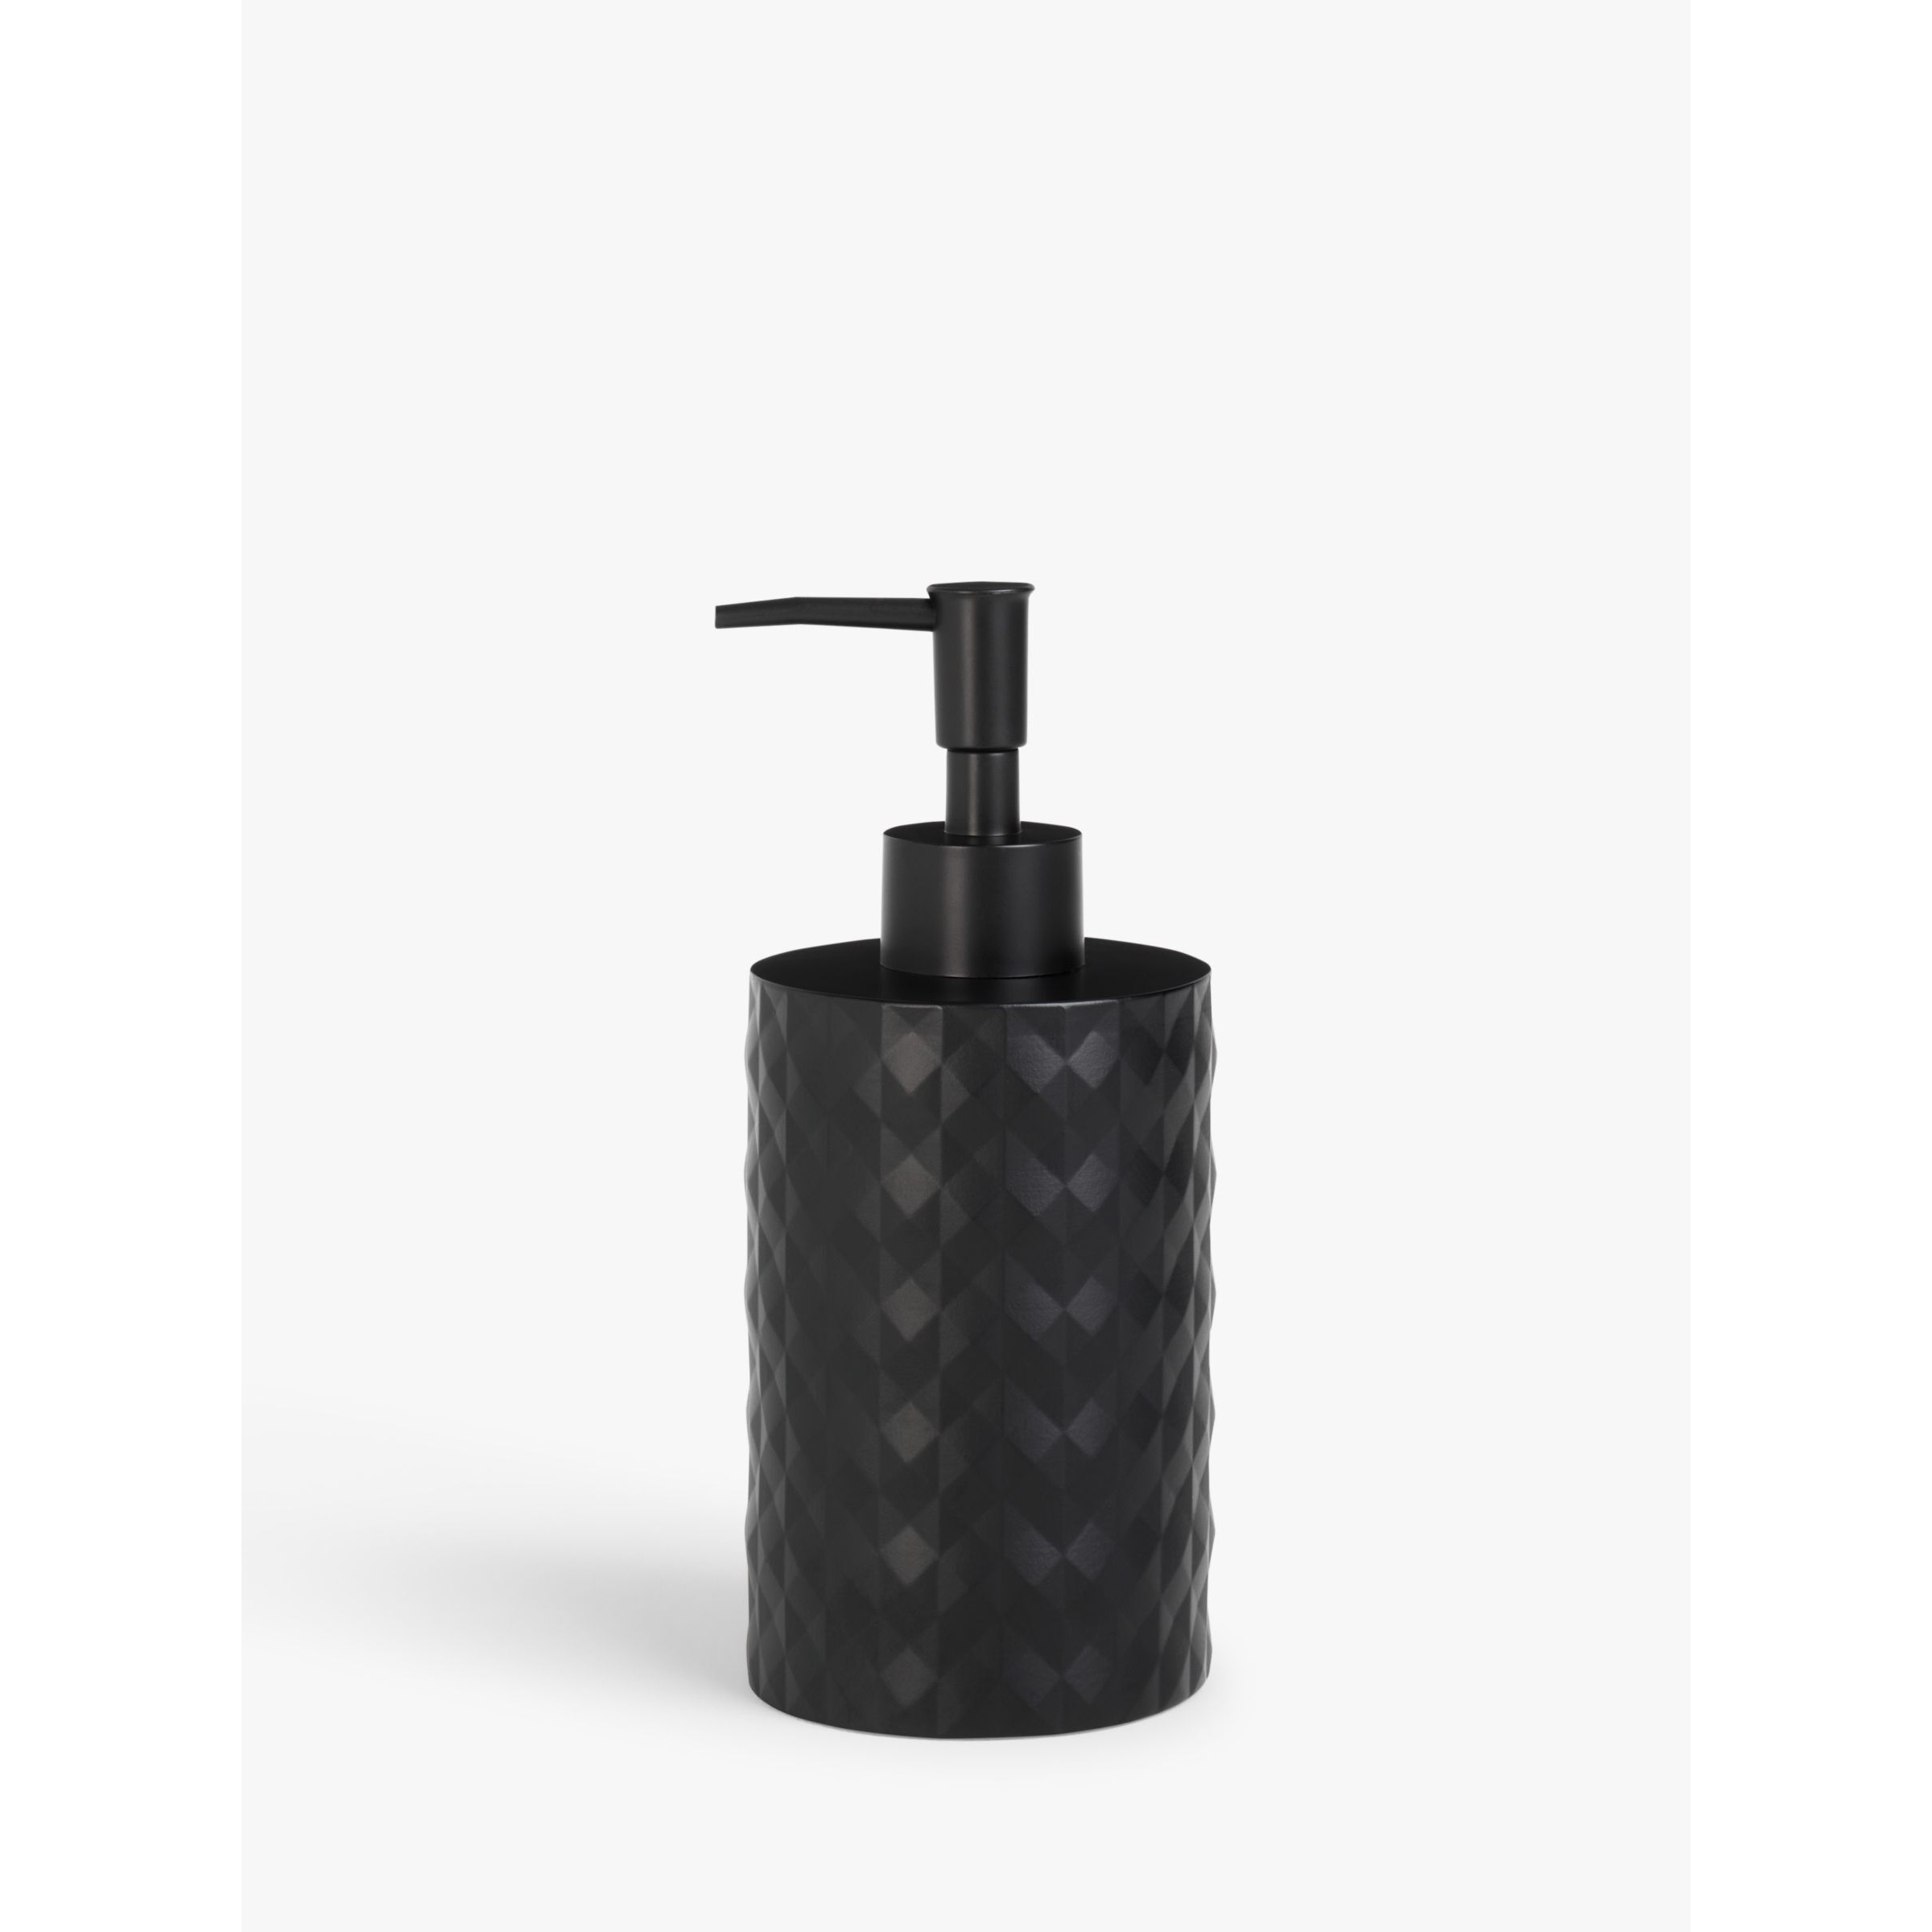 John Lewis Diamond Soap Dispenser, Black - image 1